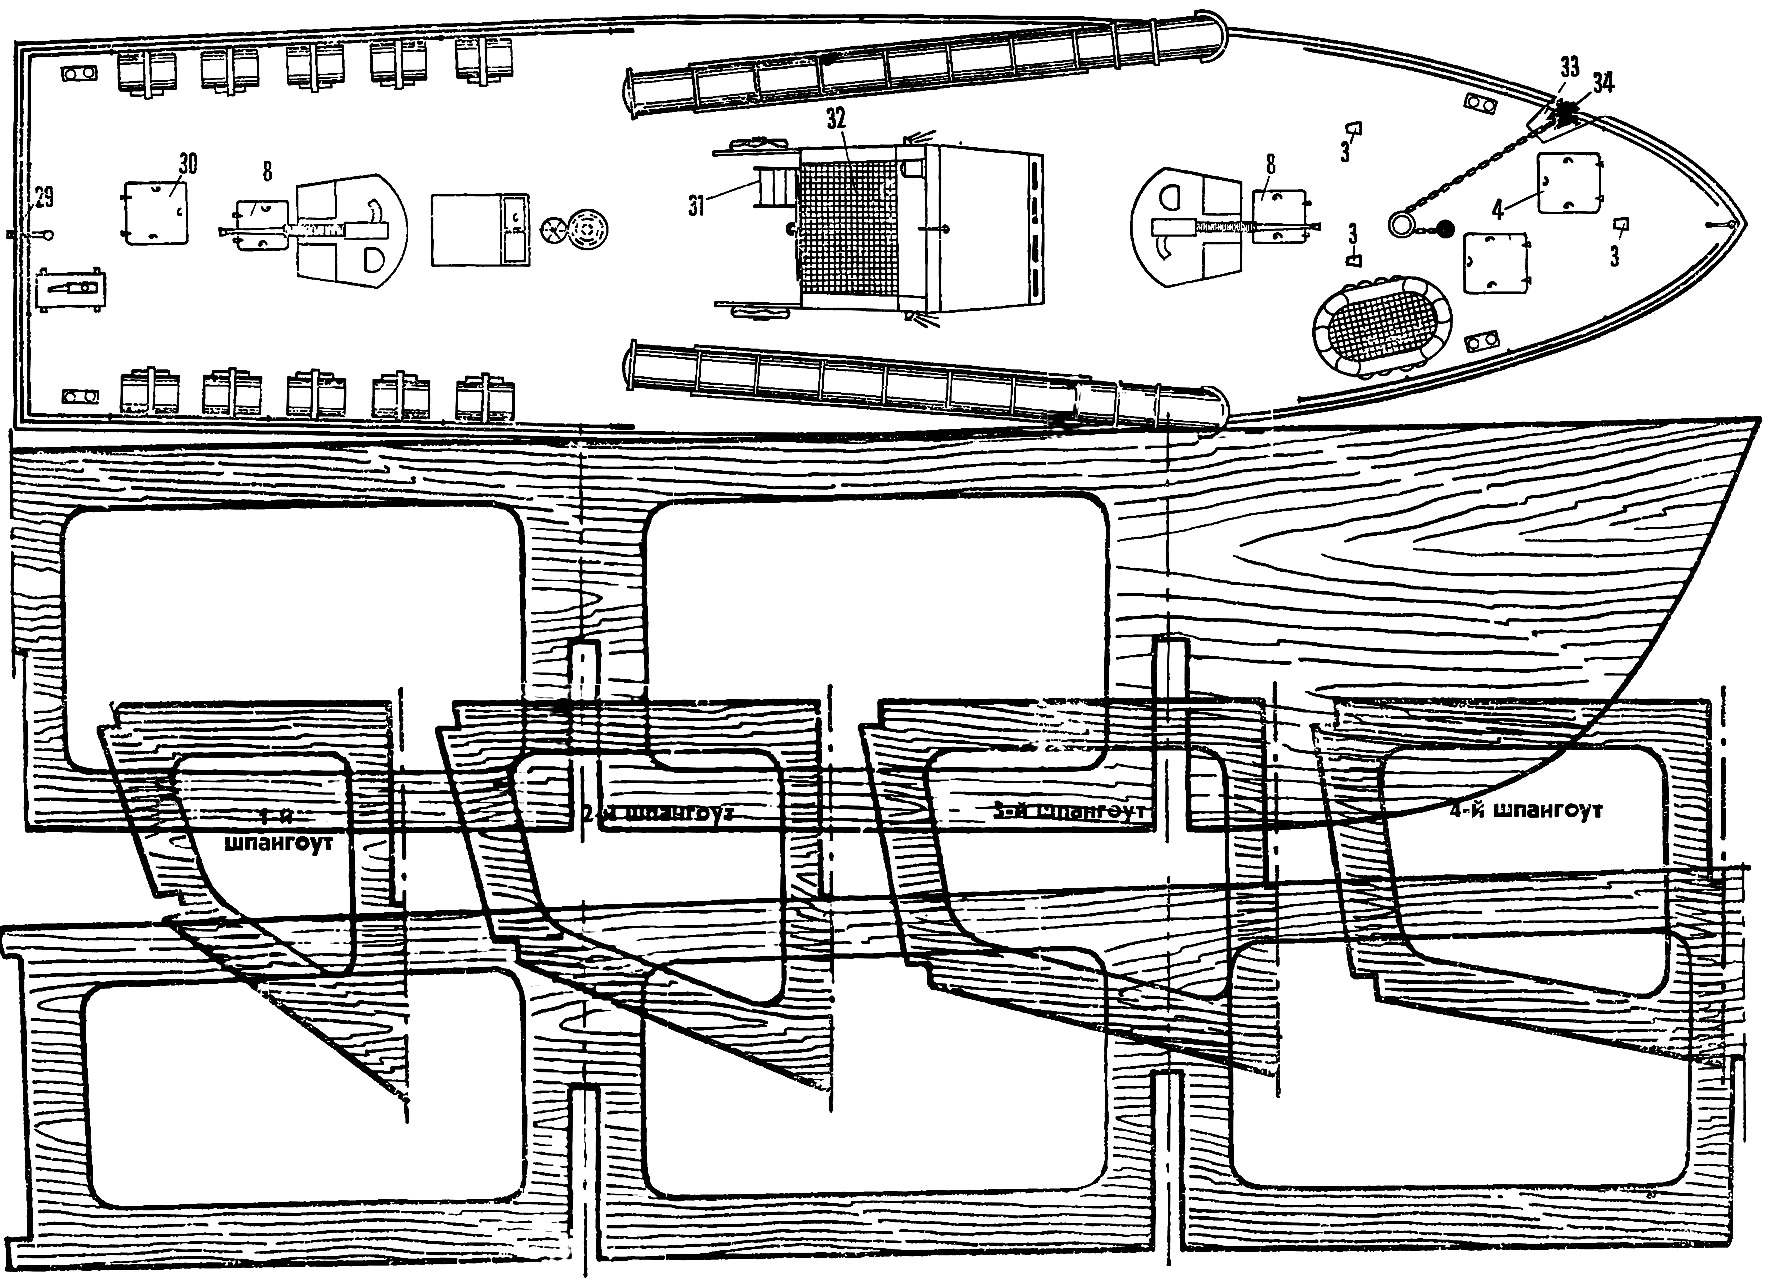 Model of torpedo boats